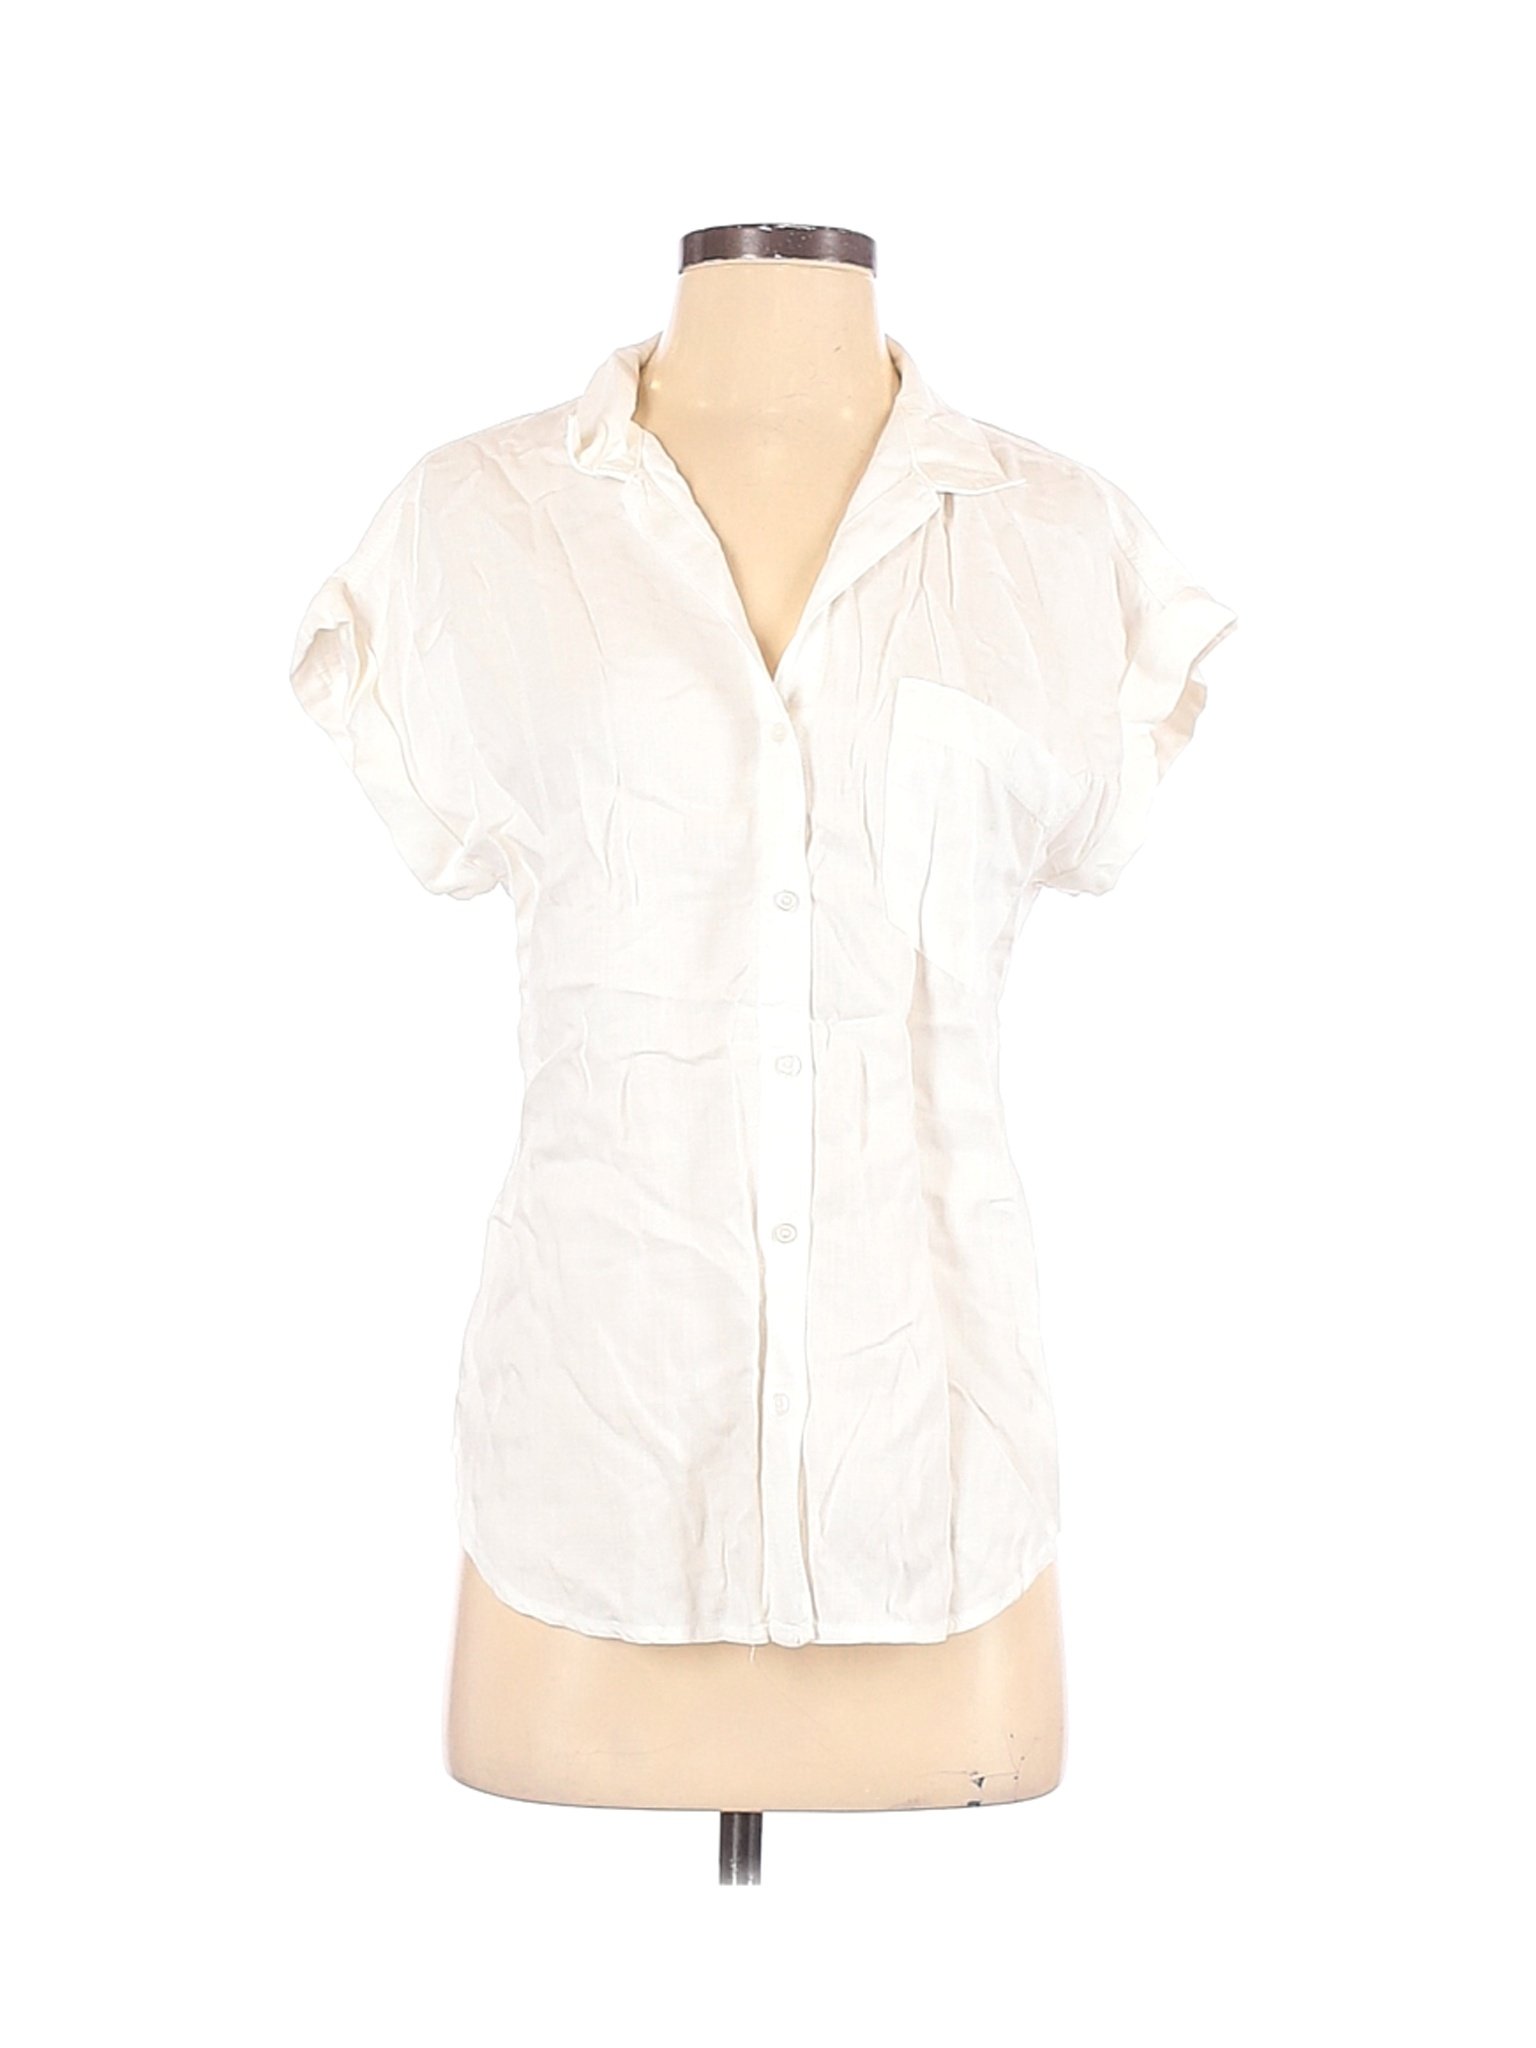 SNEAK PEEK Women White Short Sleeve Blouse S | eBay